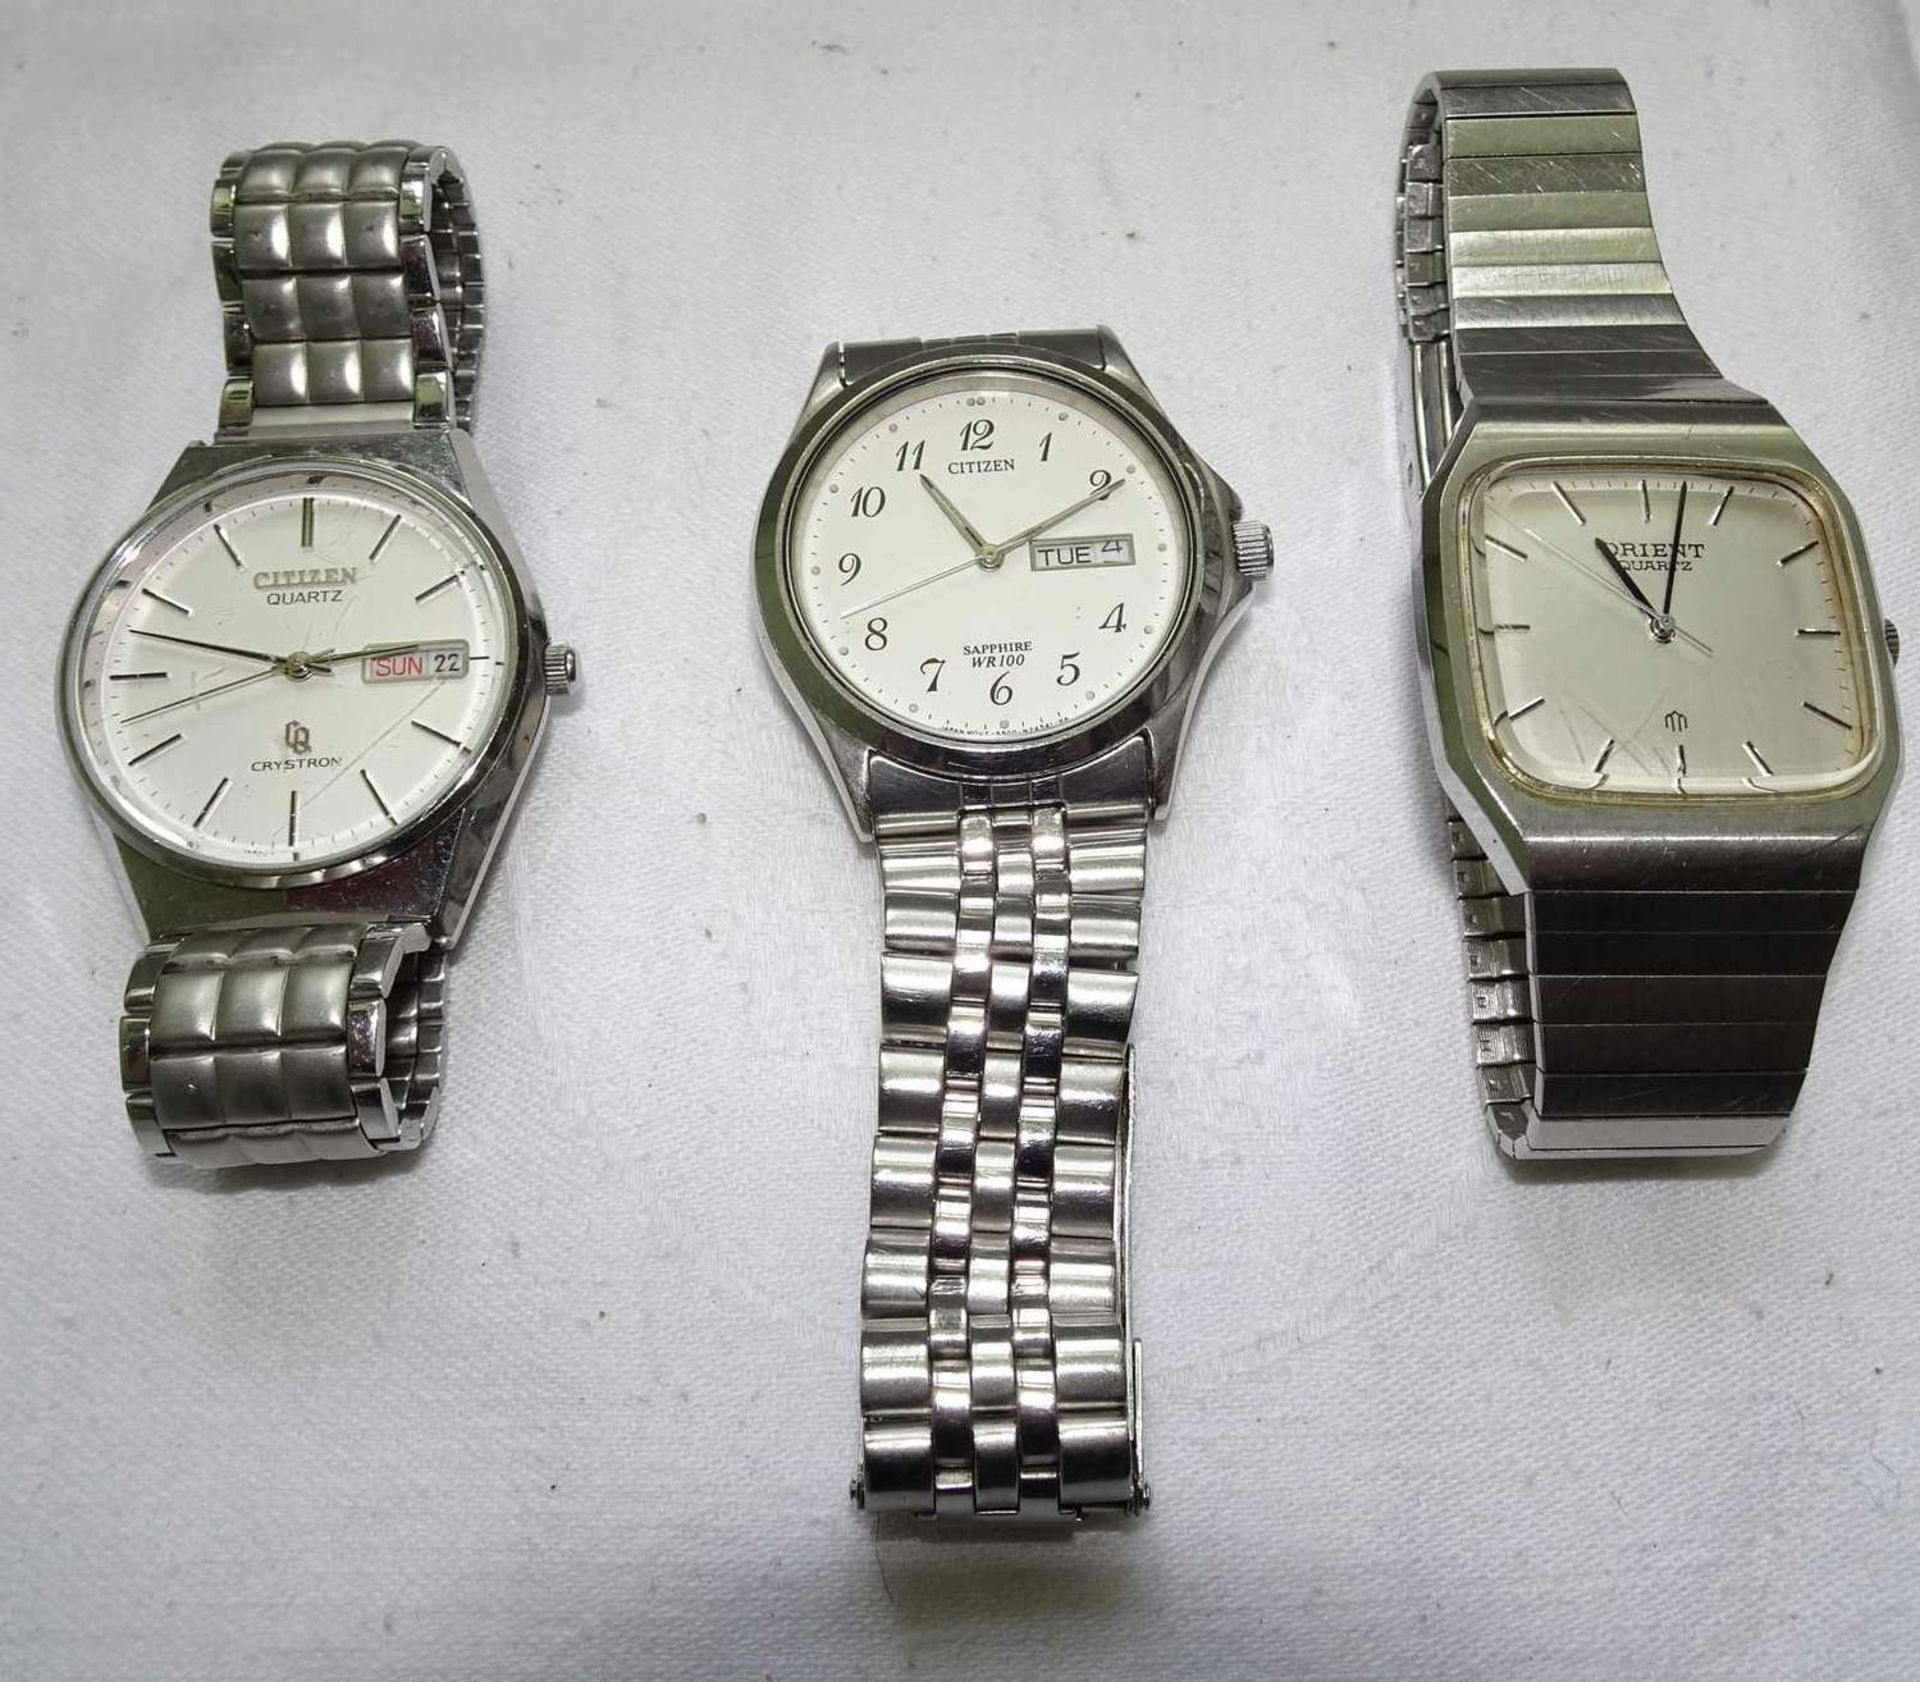 3 Citizen men's wristwatches, different models. All quartz. Worn, good condition.3 Citizen